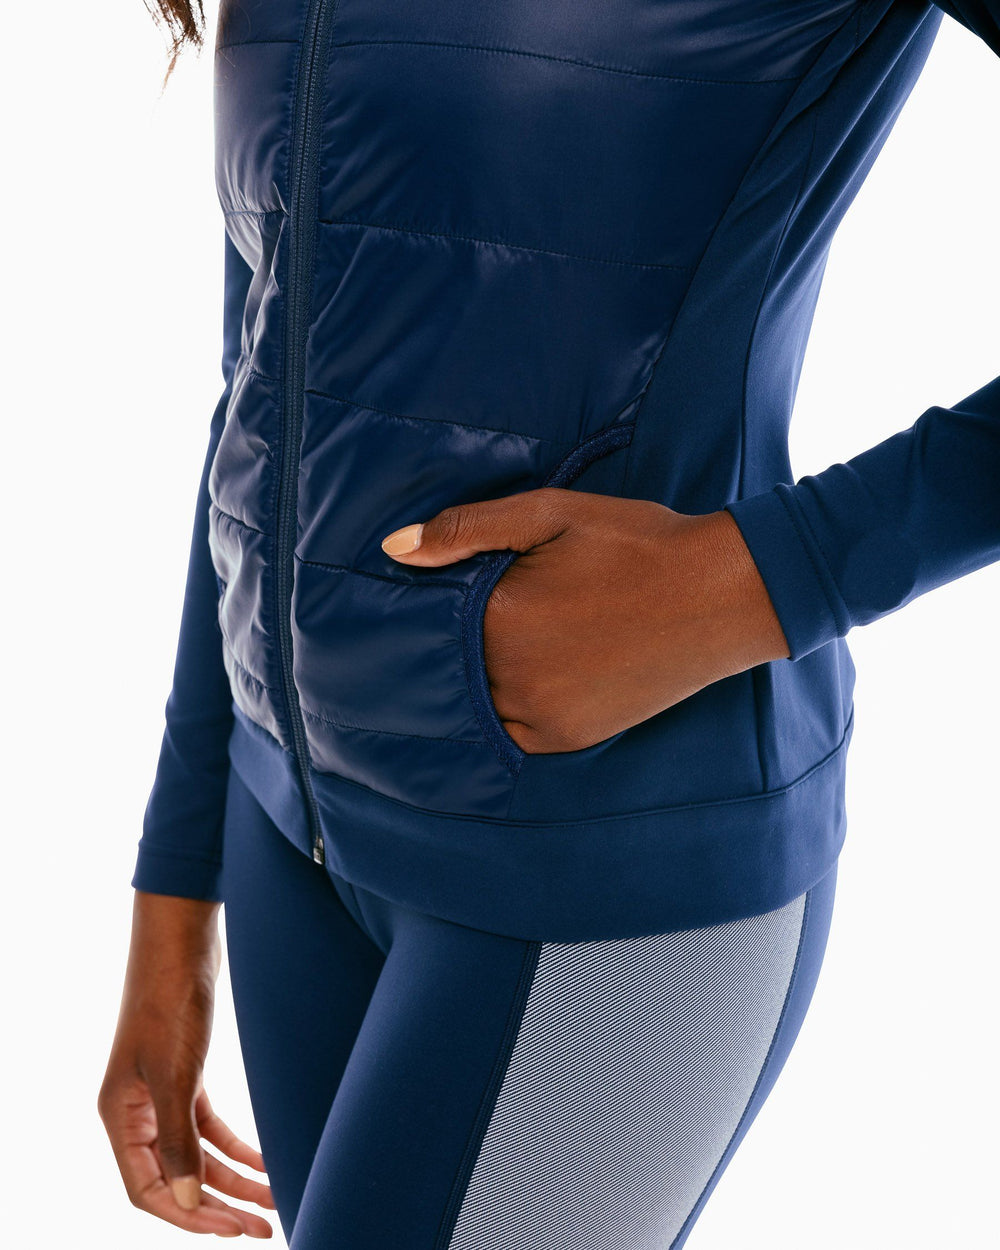 The pocket of the Women's Josette Mixed Media Full Zip Athletic Jacket - True Navy